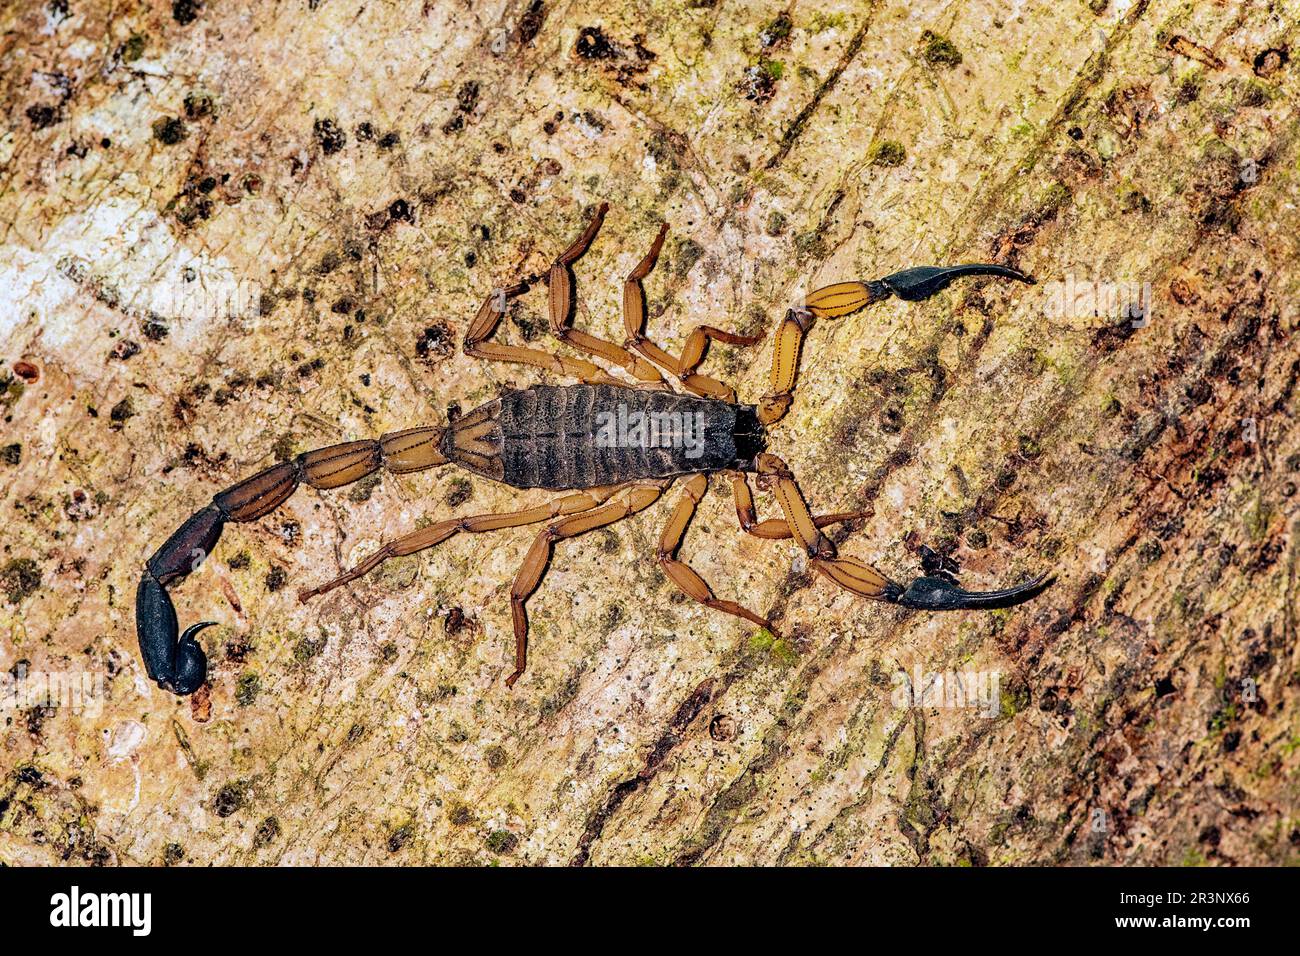 Edwards Rindenskorpion (Centuroides edwardsii). Osa-Halbinsel, Costa Rica. Stockfoto